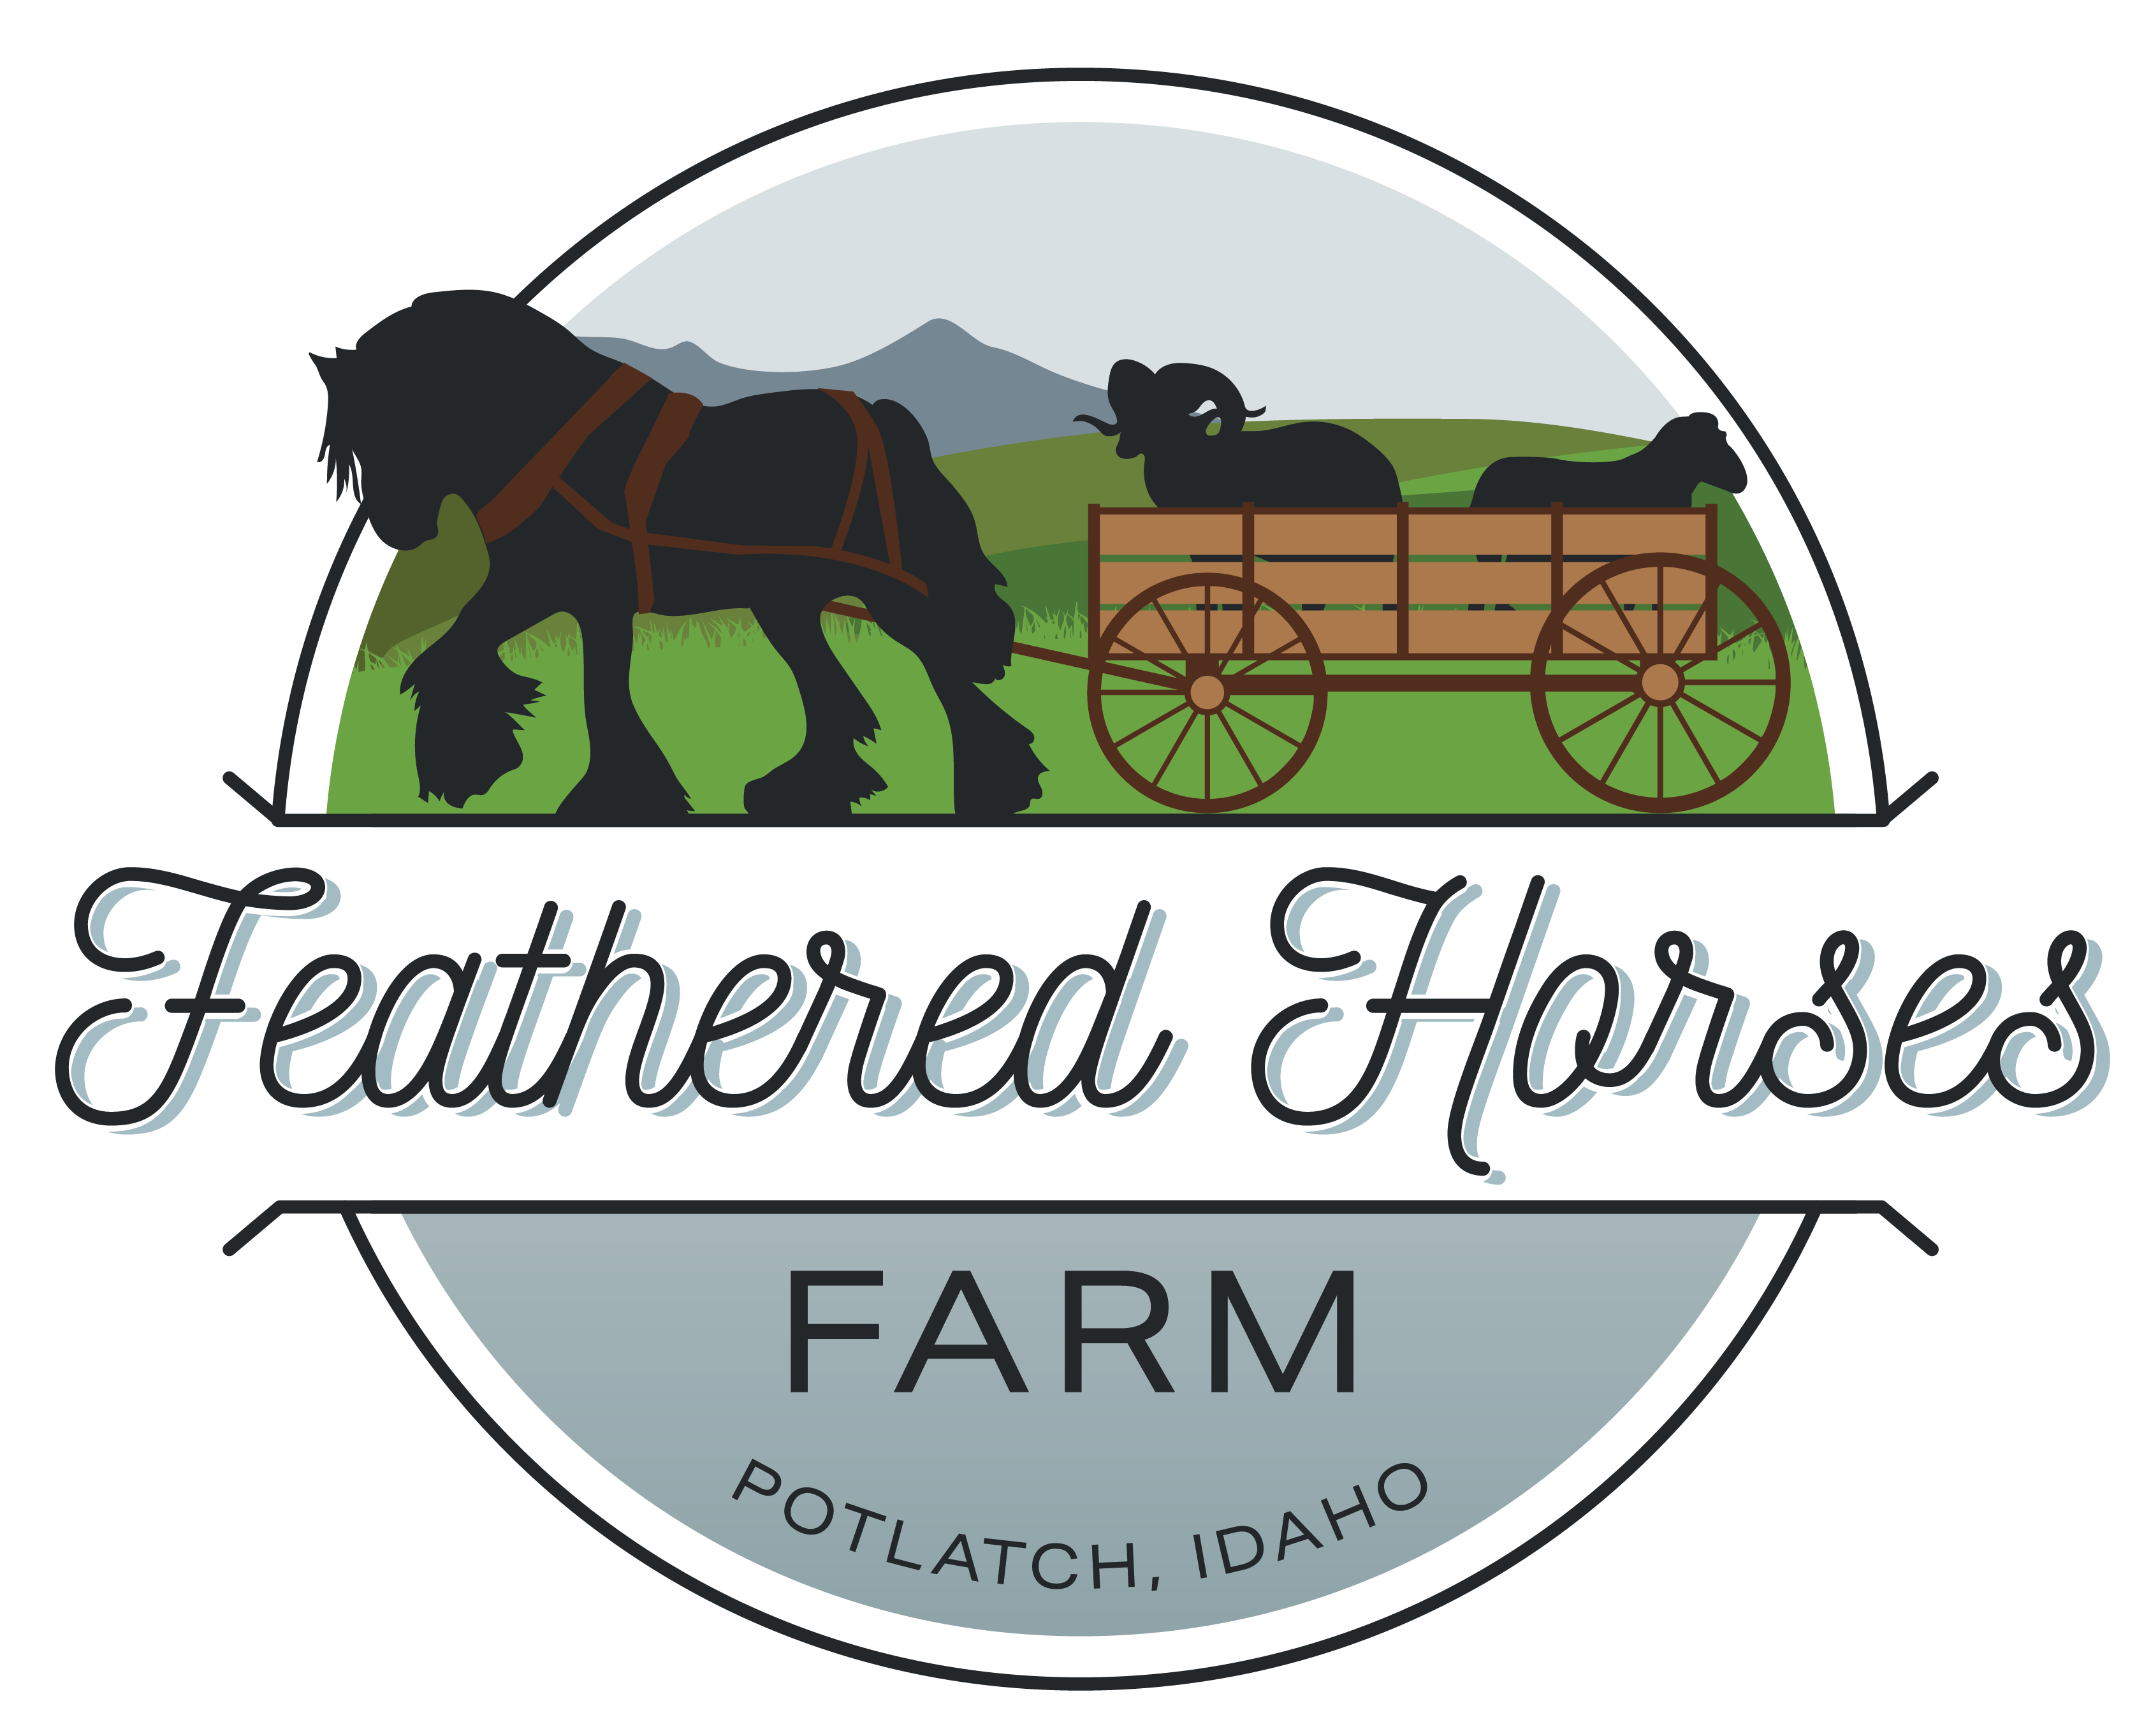 Feathered Horses Farm